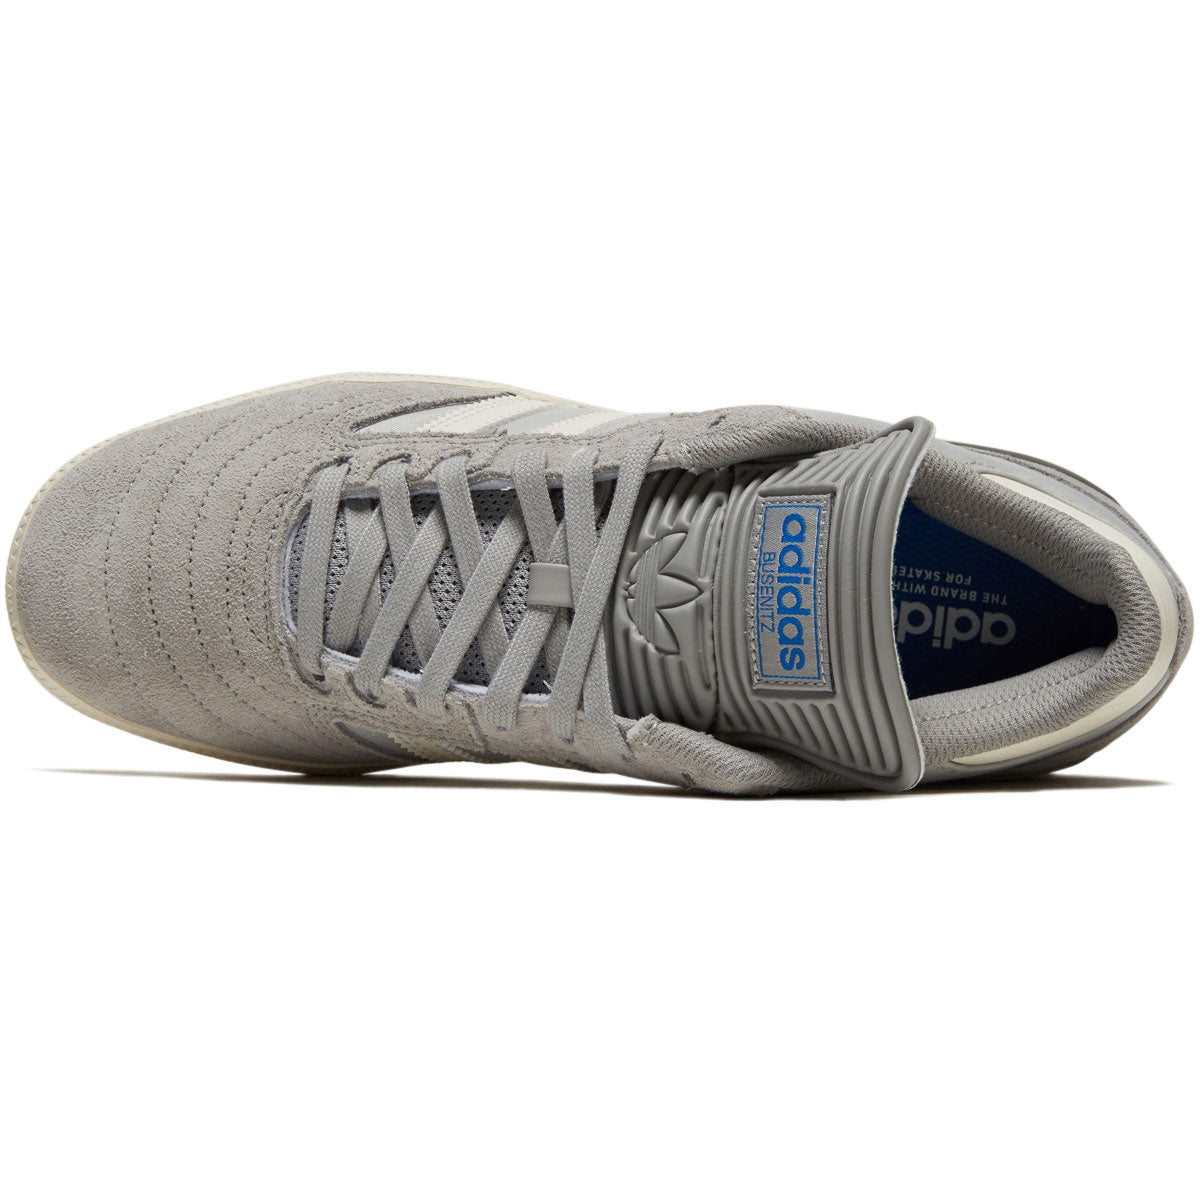 Adidas Busenitz Shoes - Solid Grey/Chalk White/Gold Metallic image 3